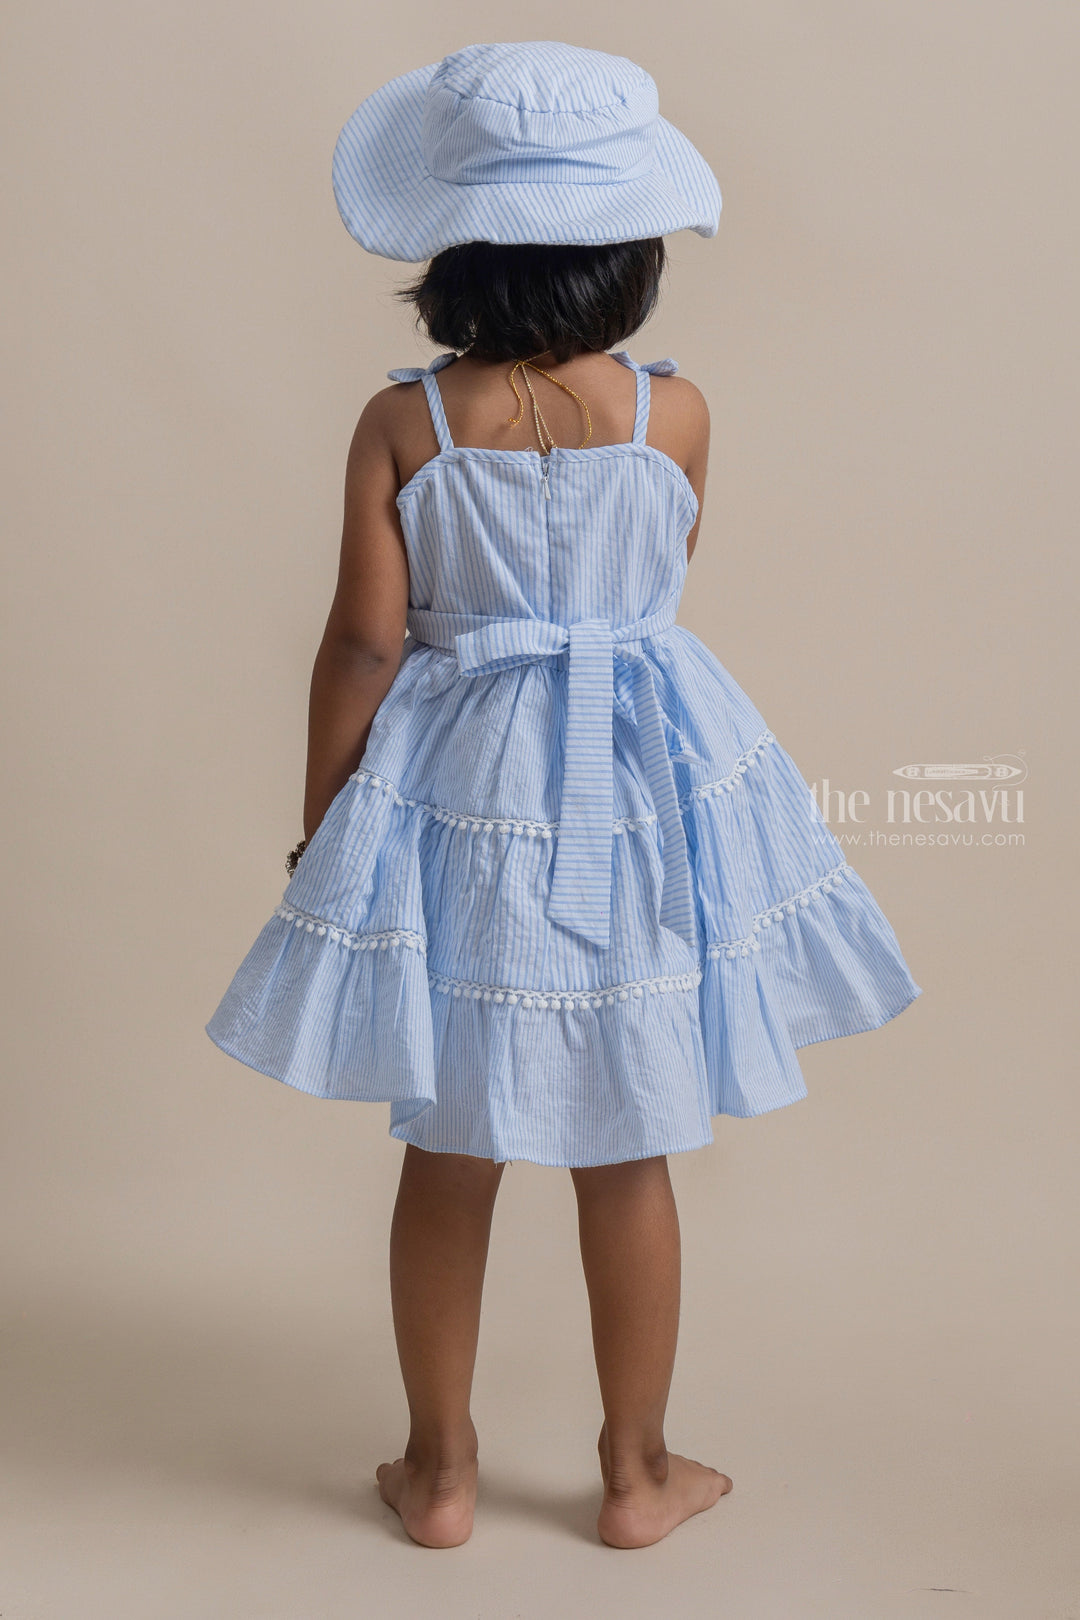 The Nesavu Baby Frock / Jhabla Adorable Blue Striped Sleeveless Girls Cotton Frock With Pretty Matching Cap psr silks Nesavu